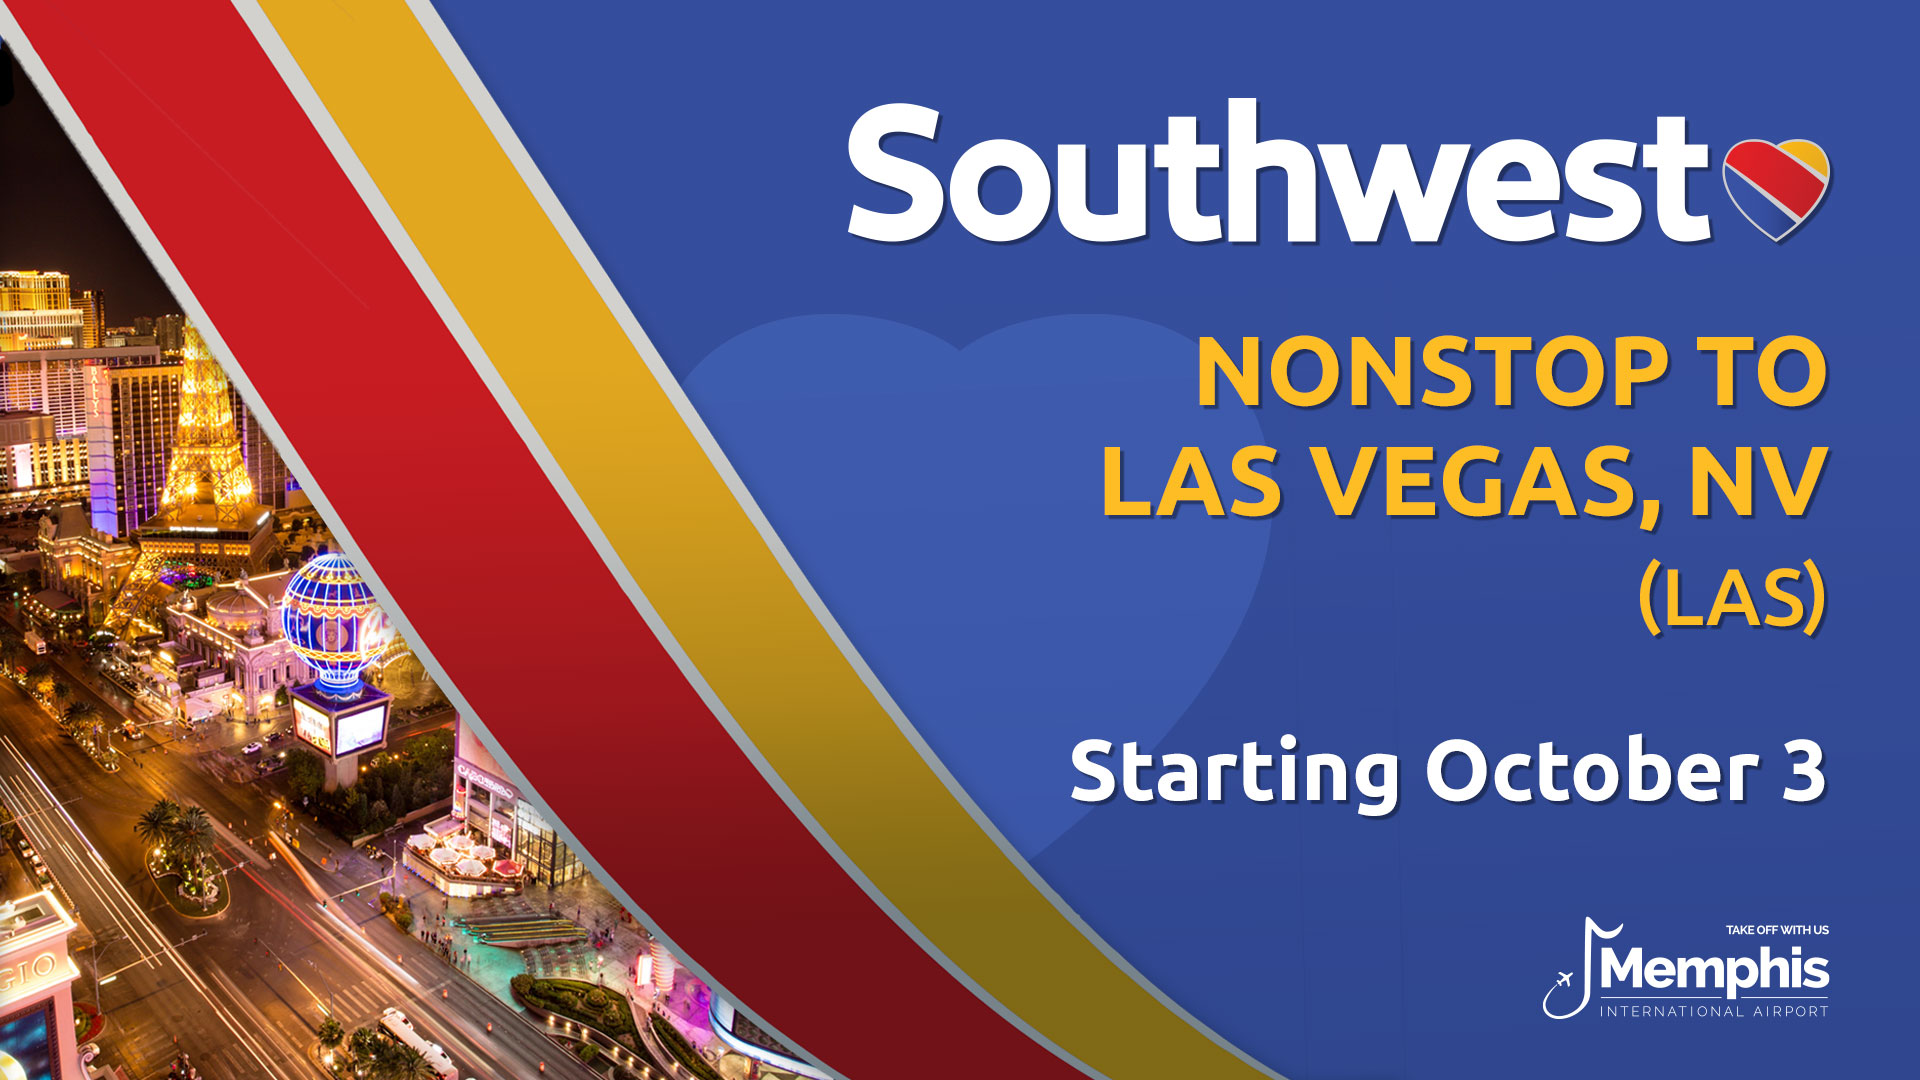 Southwest Airlines to launch nonstop service between Memphis and Las Vegas  starting October 3 - Memphis International Airport - MEM